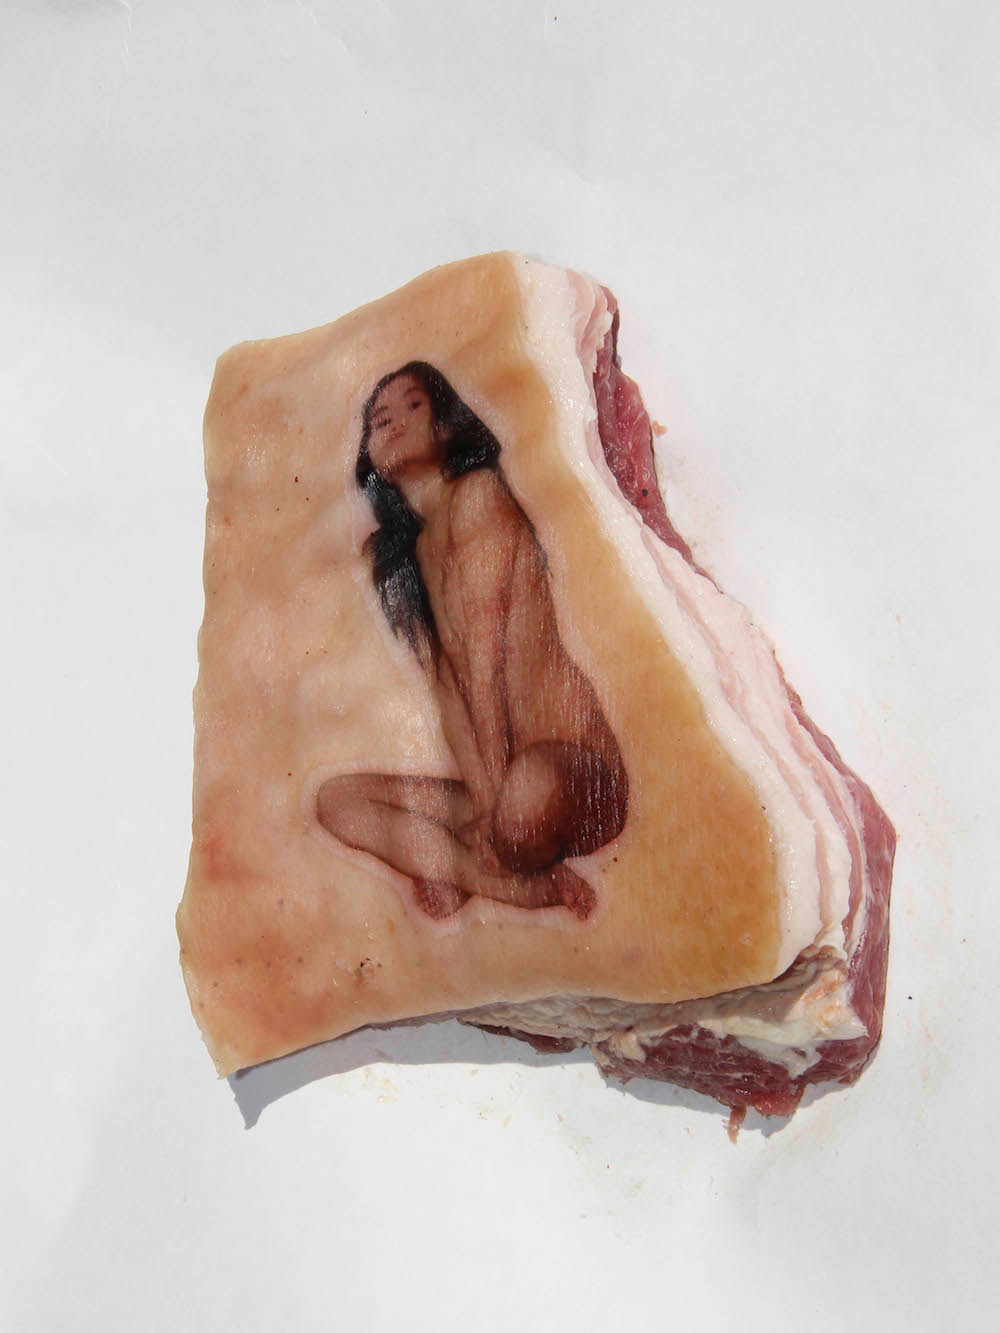 John Yuyi, Skin on Skin 4, 2016, Gallery Vacancy